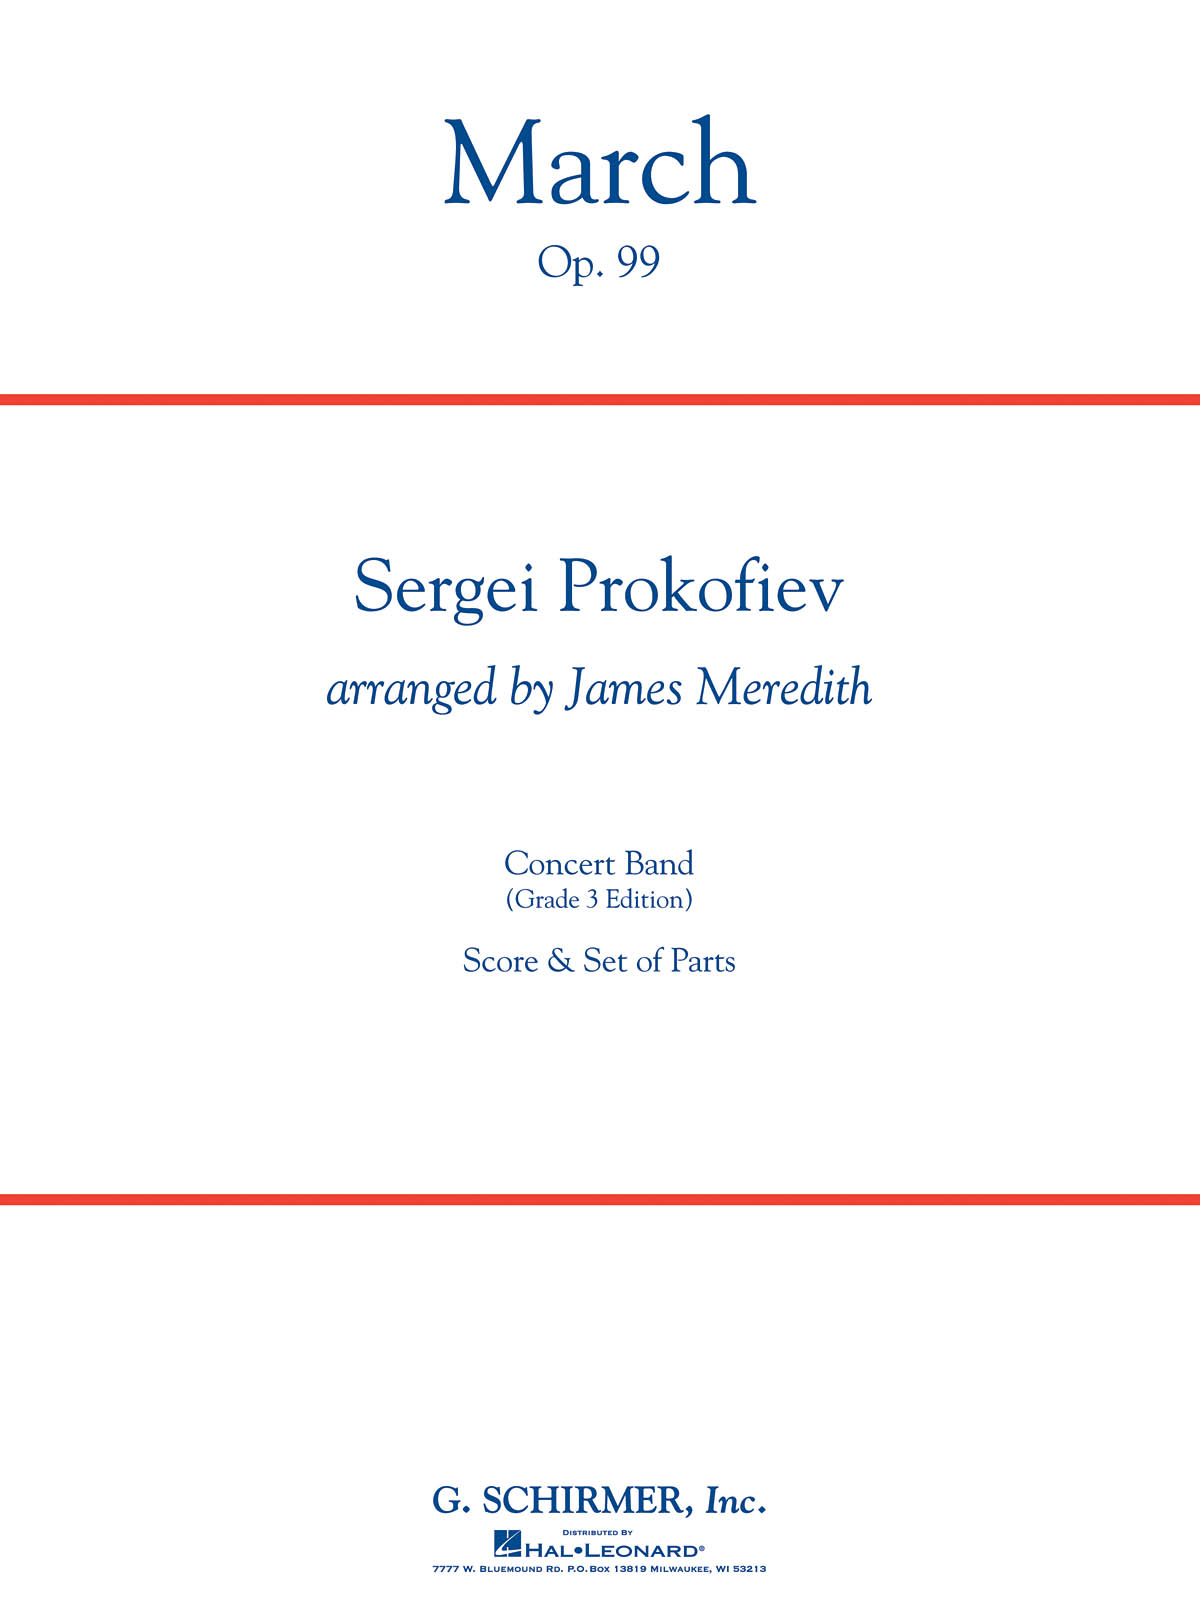 Sergei Prokofiev: March, Op. 99 (Harmonium)